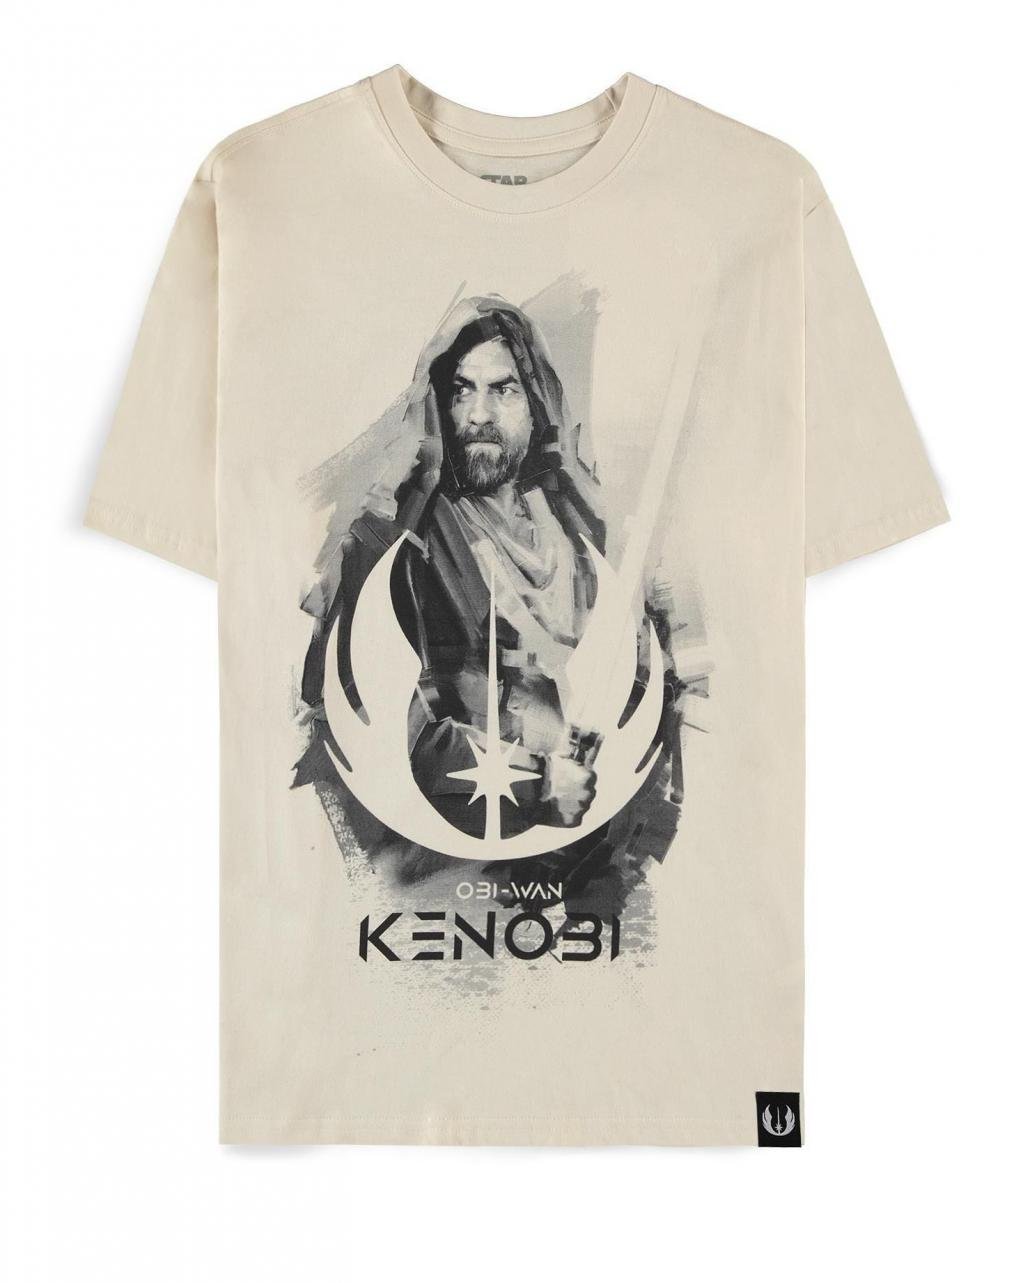 STAR WARS - Obi Wan Kenobi - Men's T-Shirt (S)